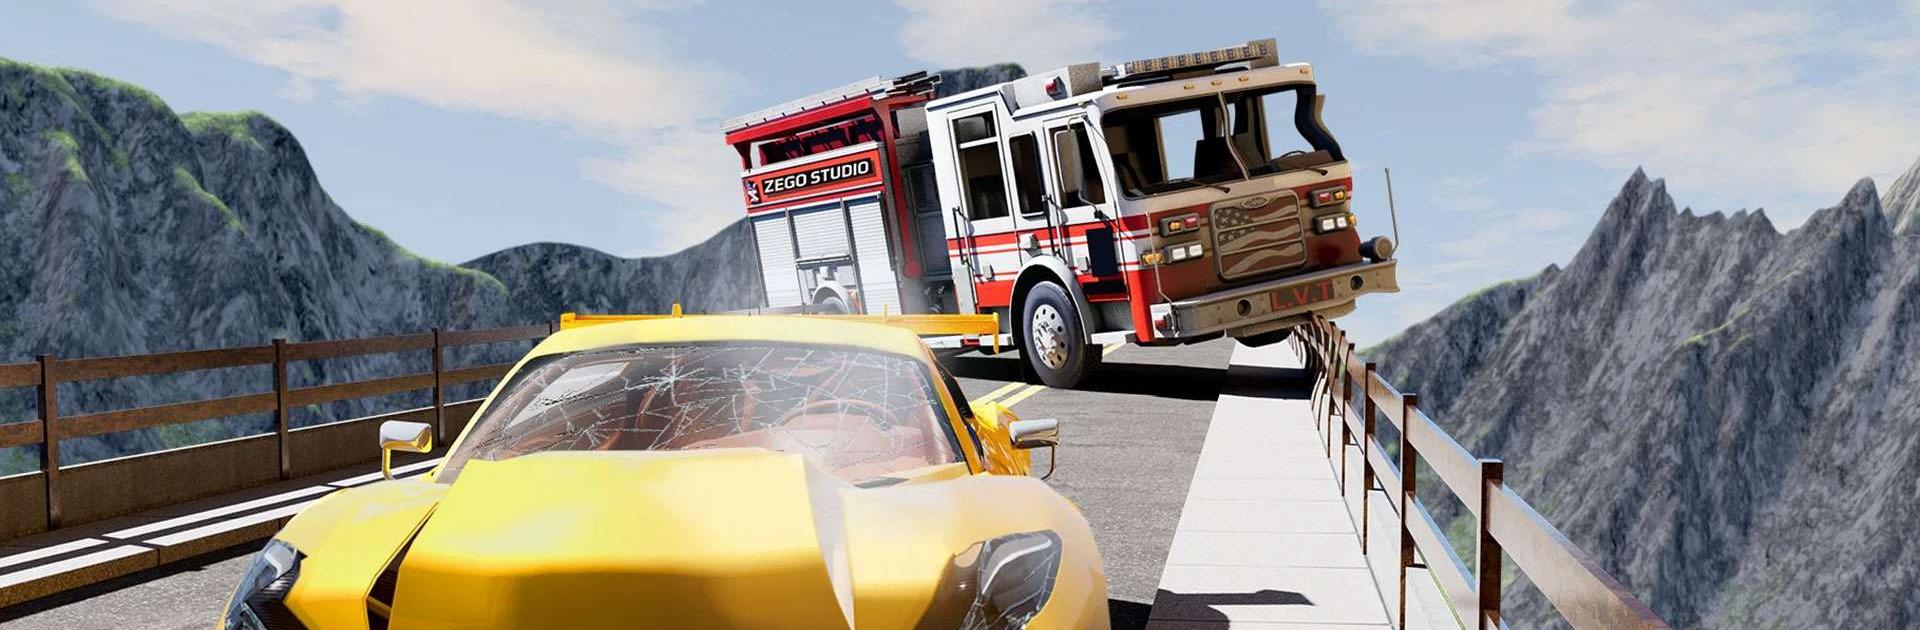 CAR CRASH SIMULATOR free online game on